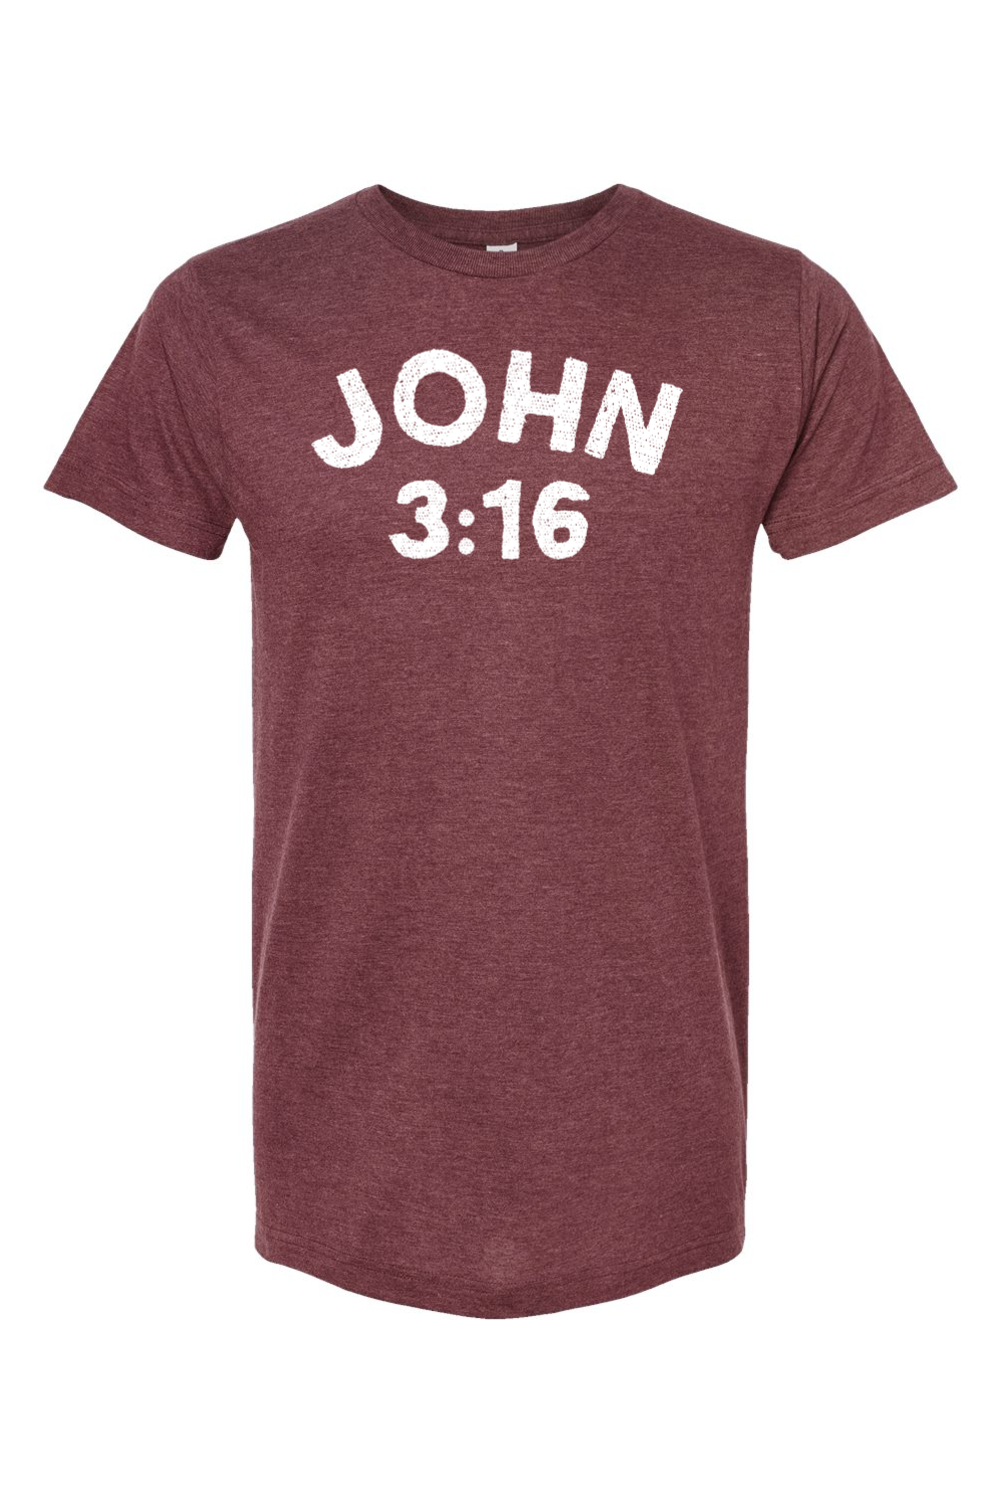 John 3:16 - T-Shirt